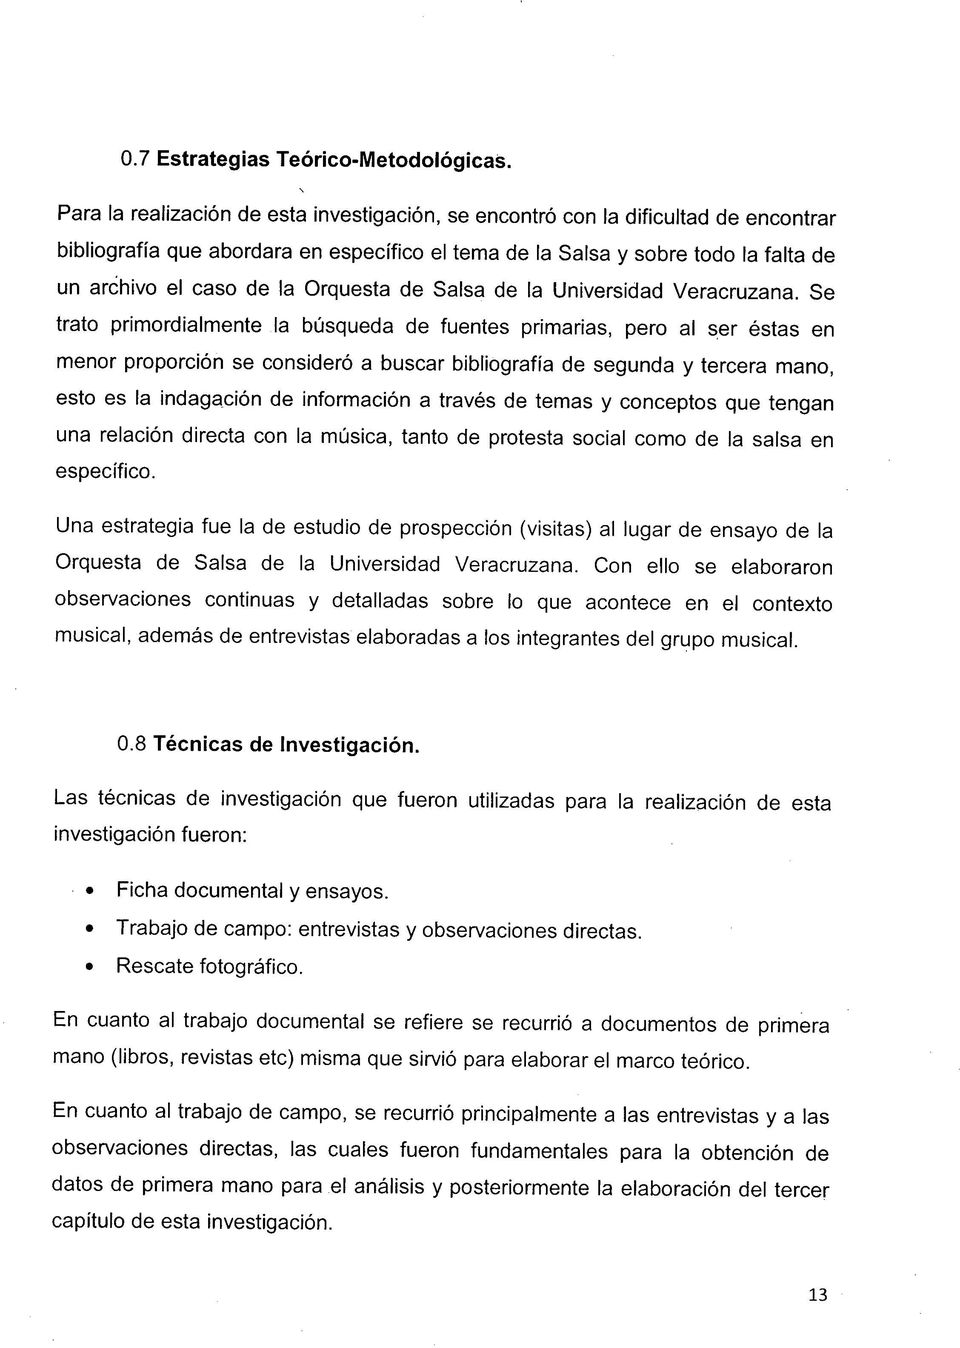 O rquesta de Salsa de la Universidad Veracruzana.